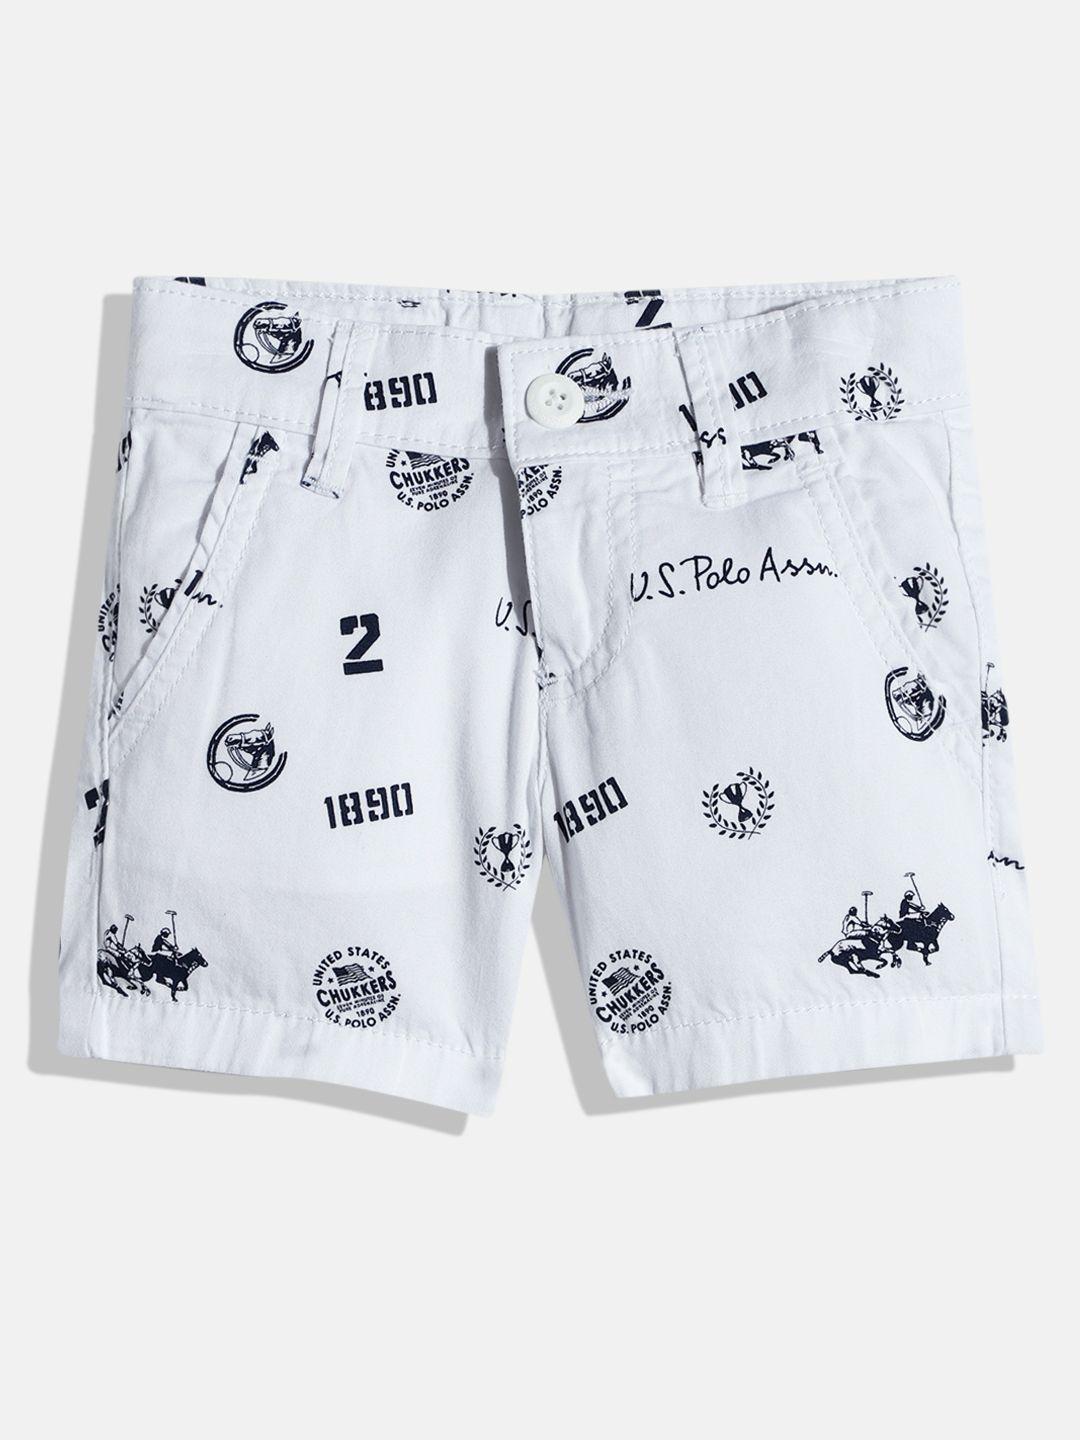 u.s. polo assn. kids boys white & navy blue brand logo printed pure cotton twill shorts